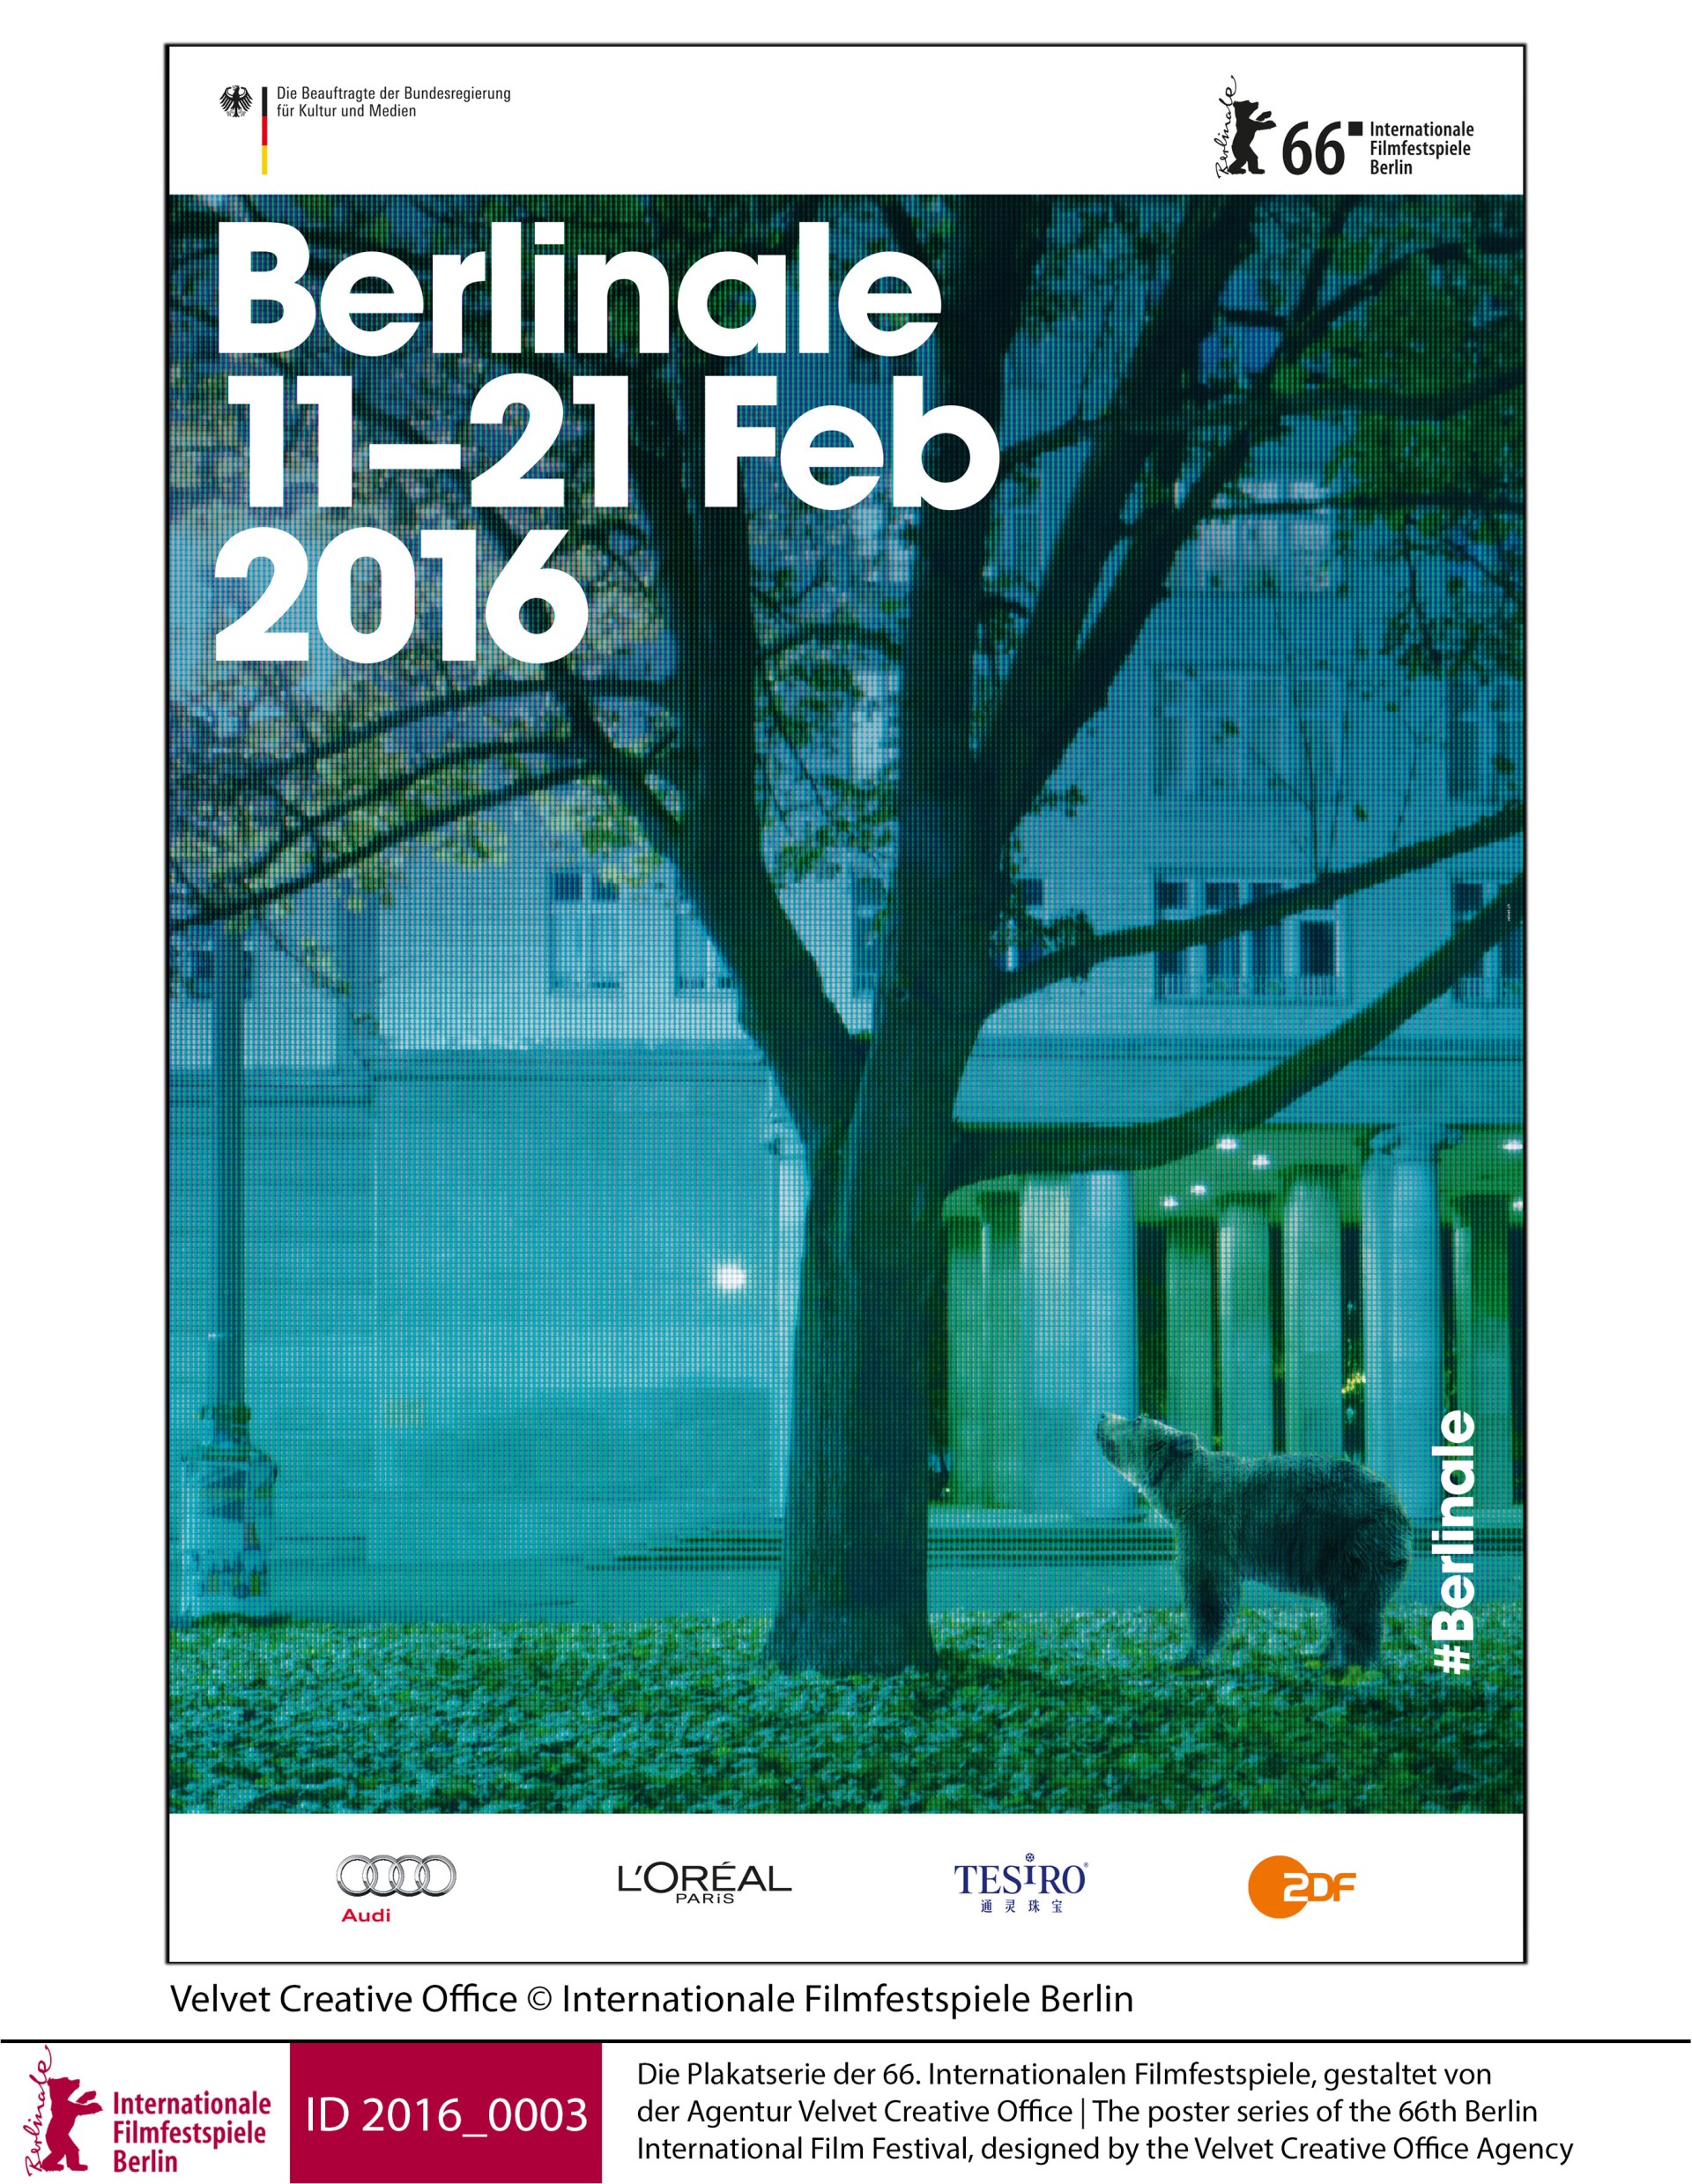 Berlinale, Archive, Photos & Videos